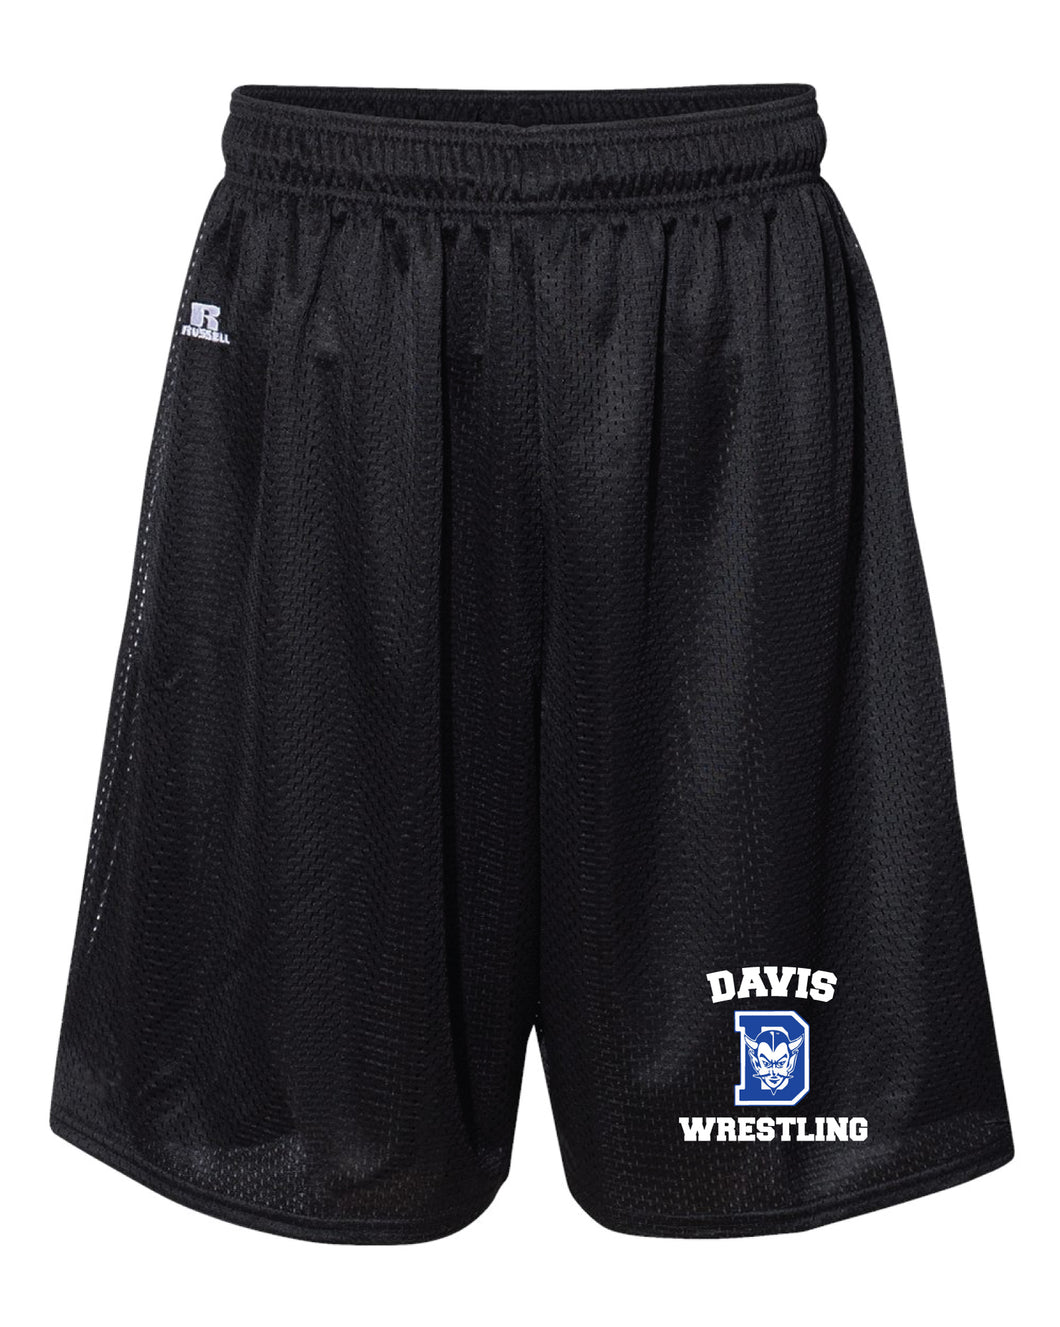 Davis Wrestling Russell Athletic Tech Shorts - Black - 5KounT2018